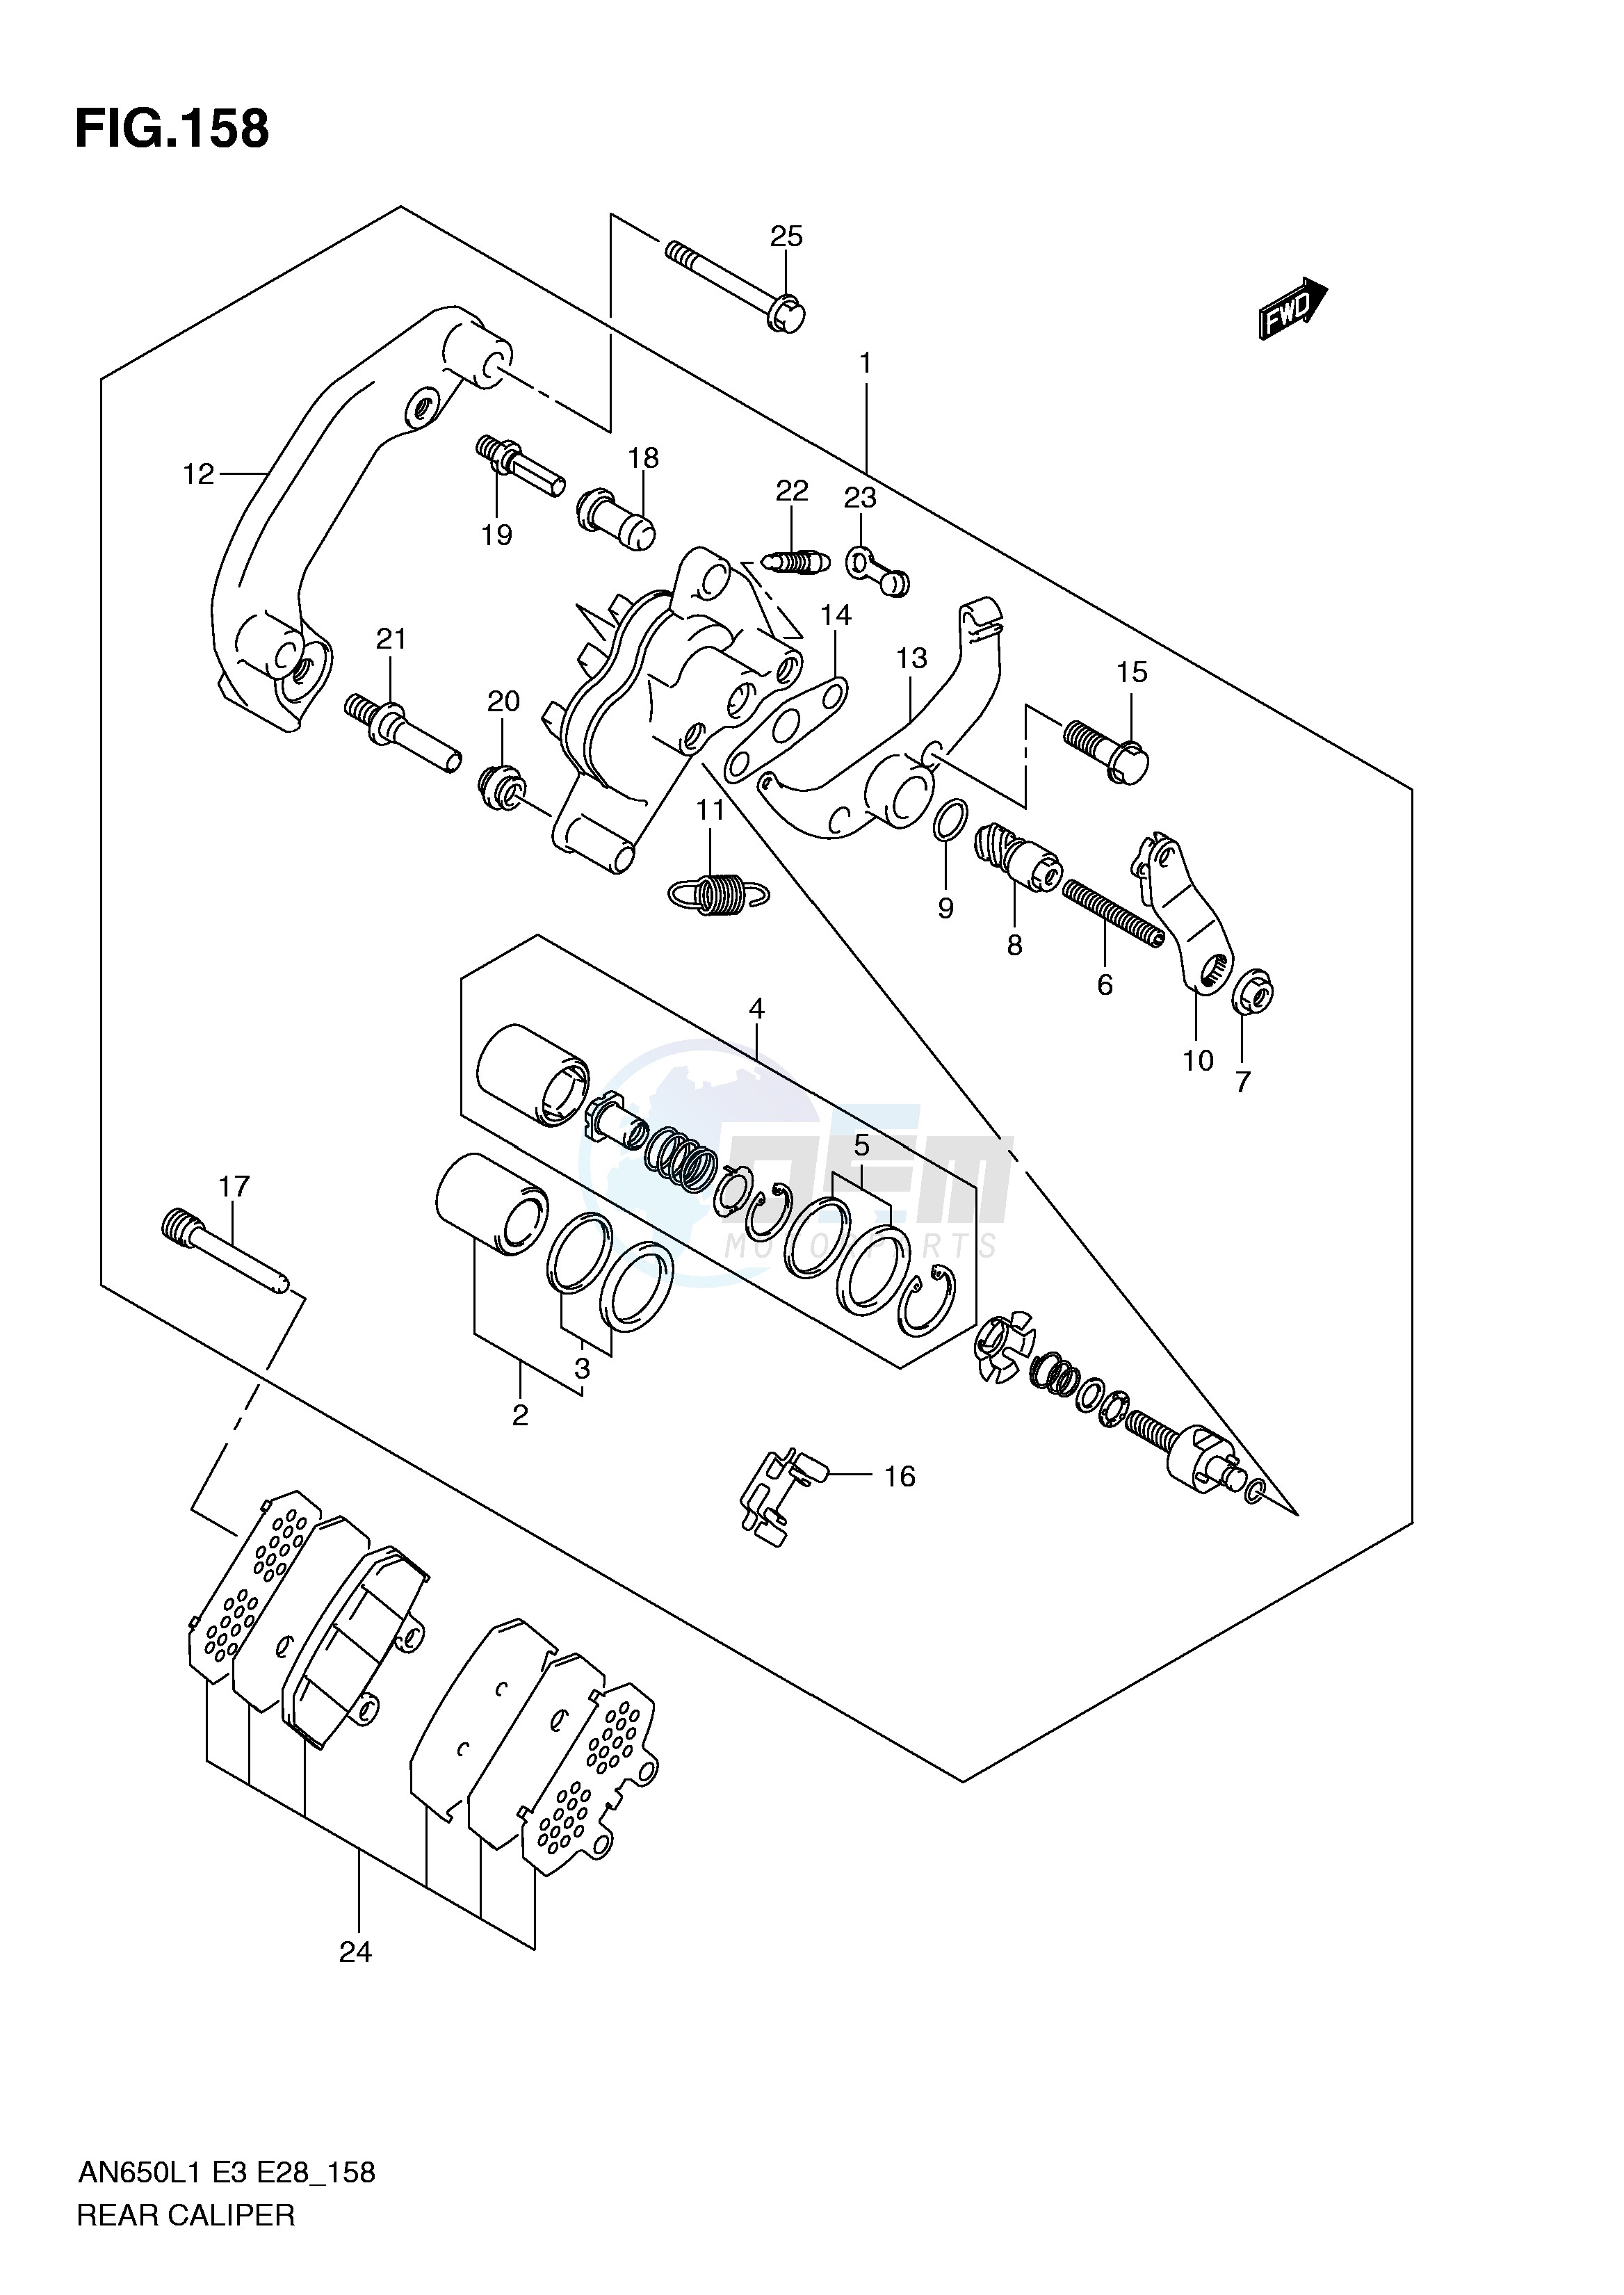 REAR CALIPER (AN650AL1 E28) blueprint